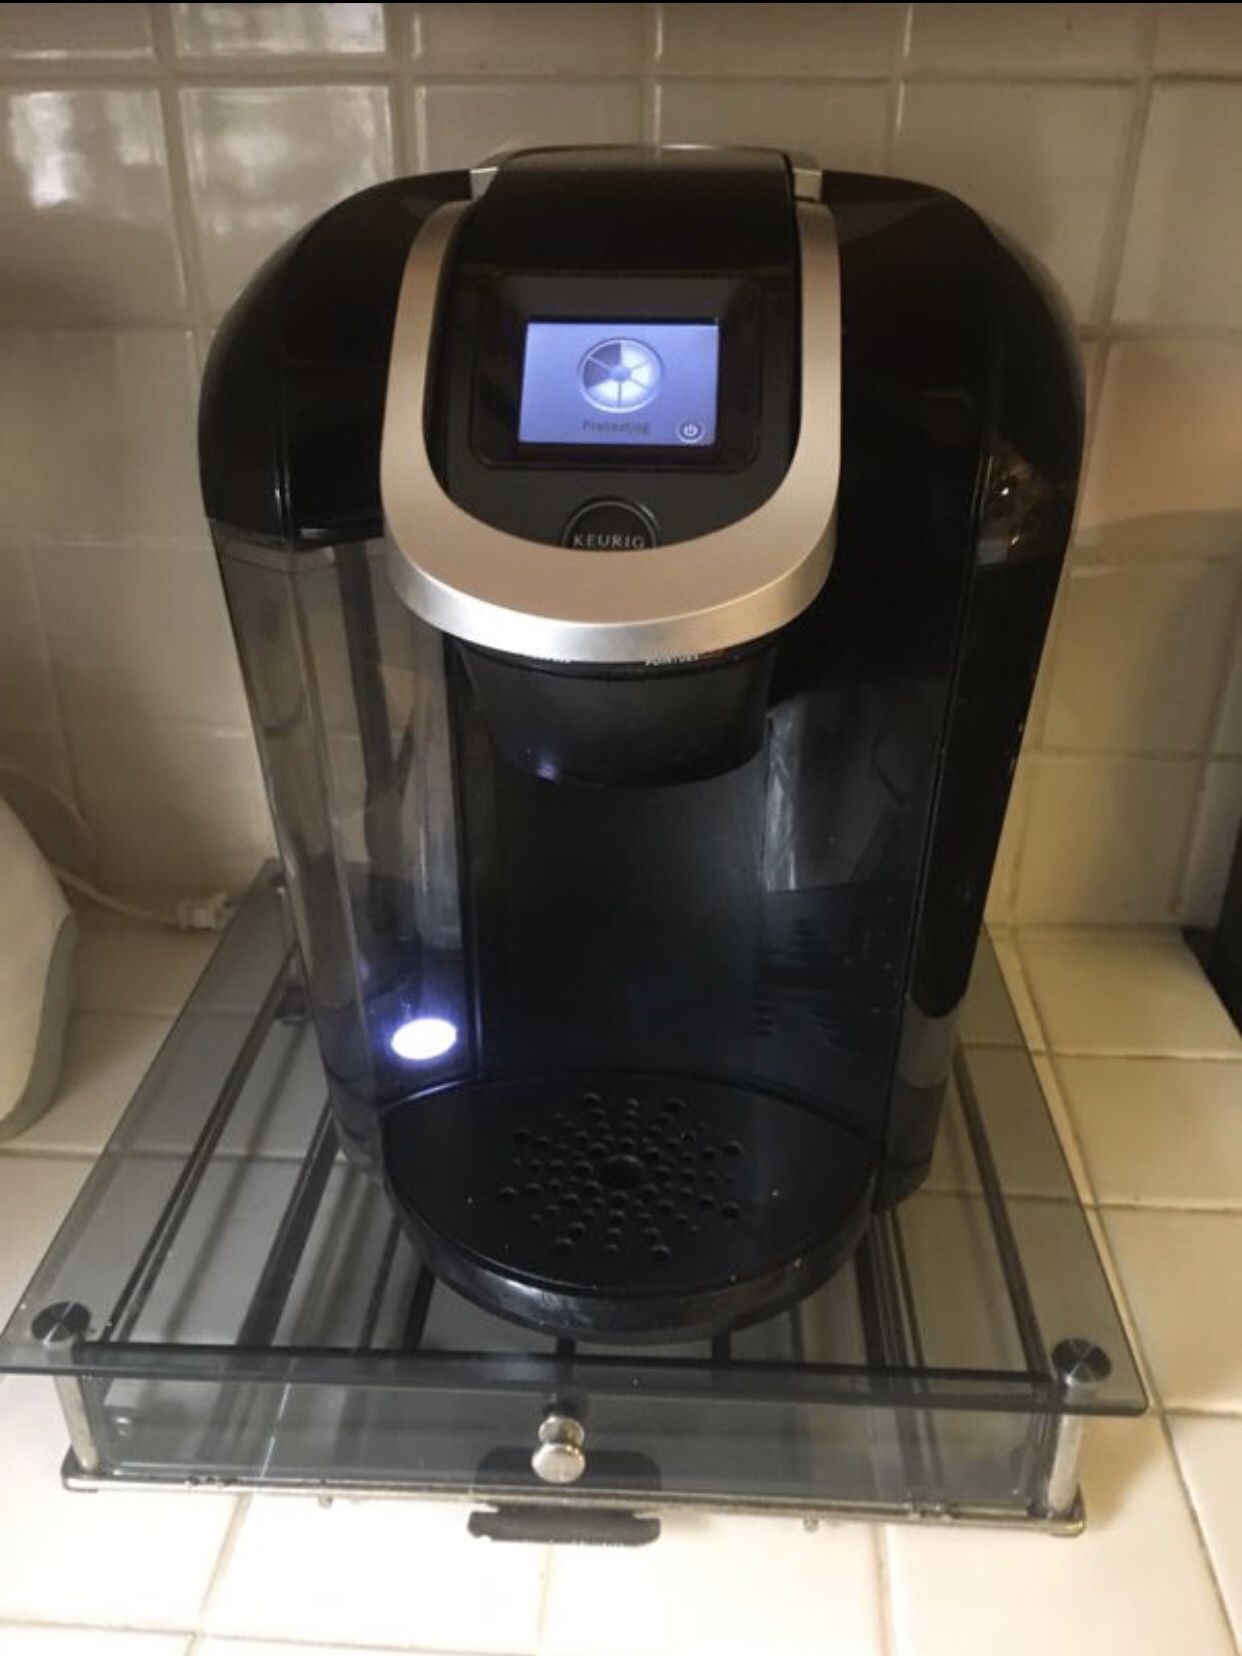 Keurig 2.0 pod coffee maker with glass pod holder